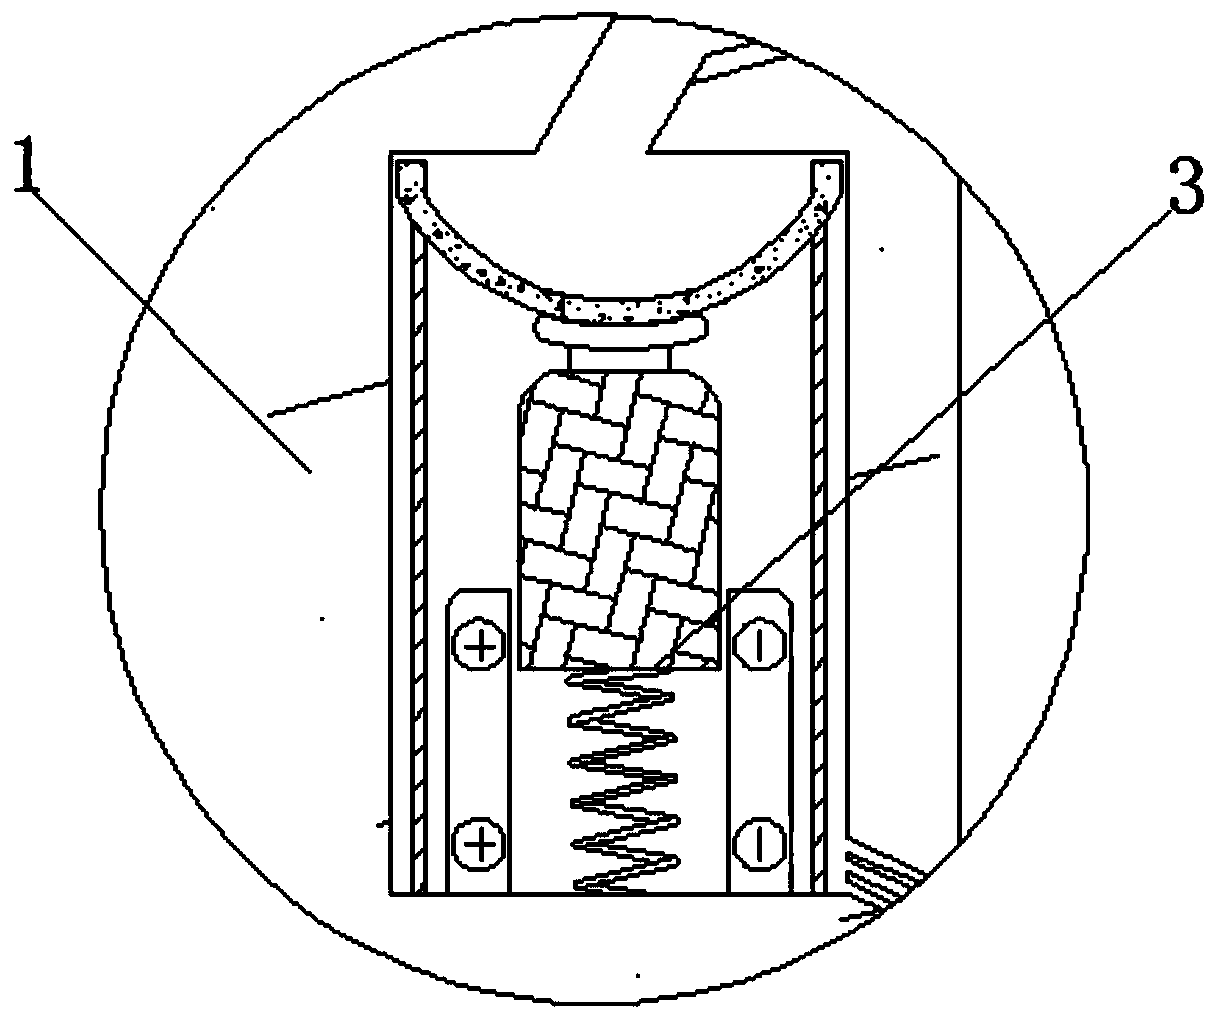 Casement window automatic closing device based on capacitance sensing